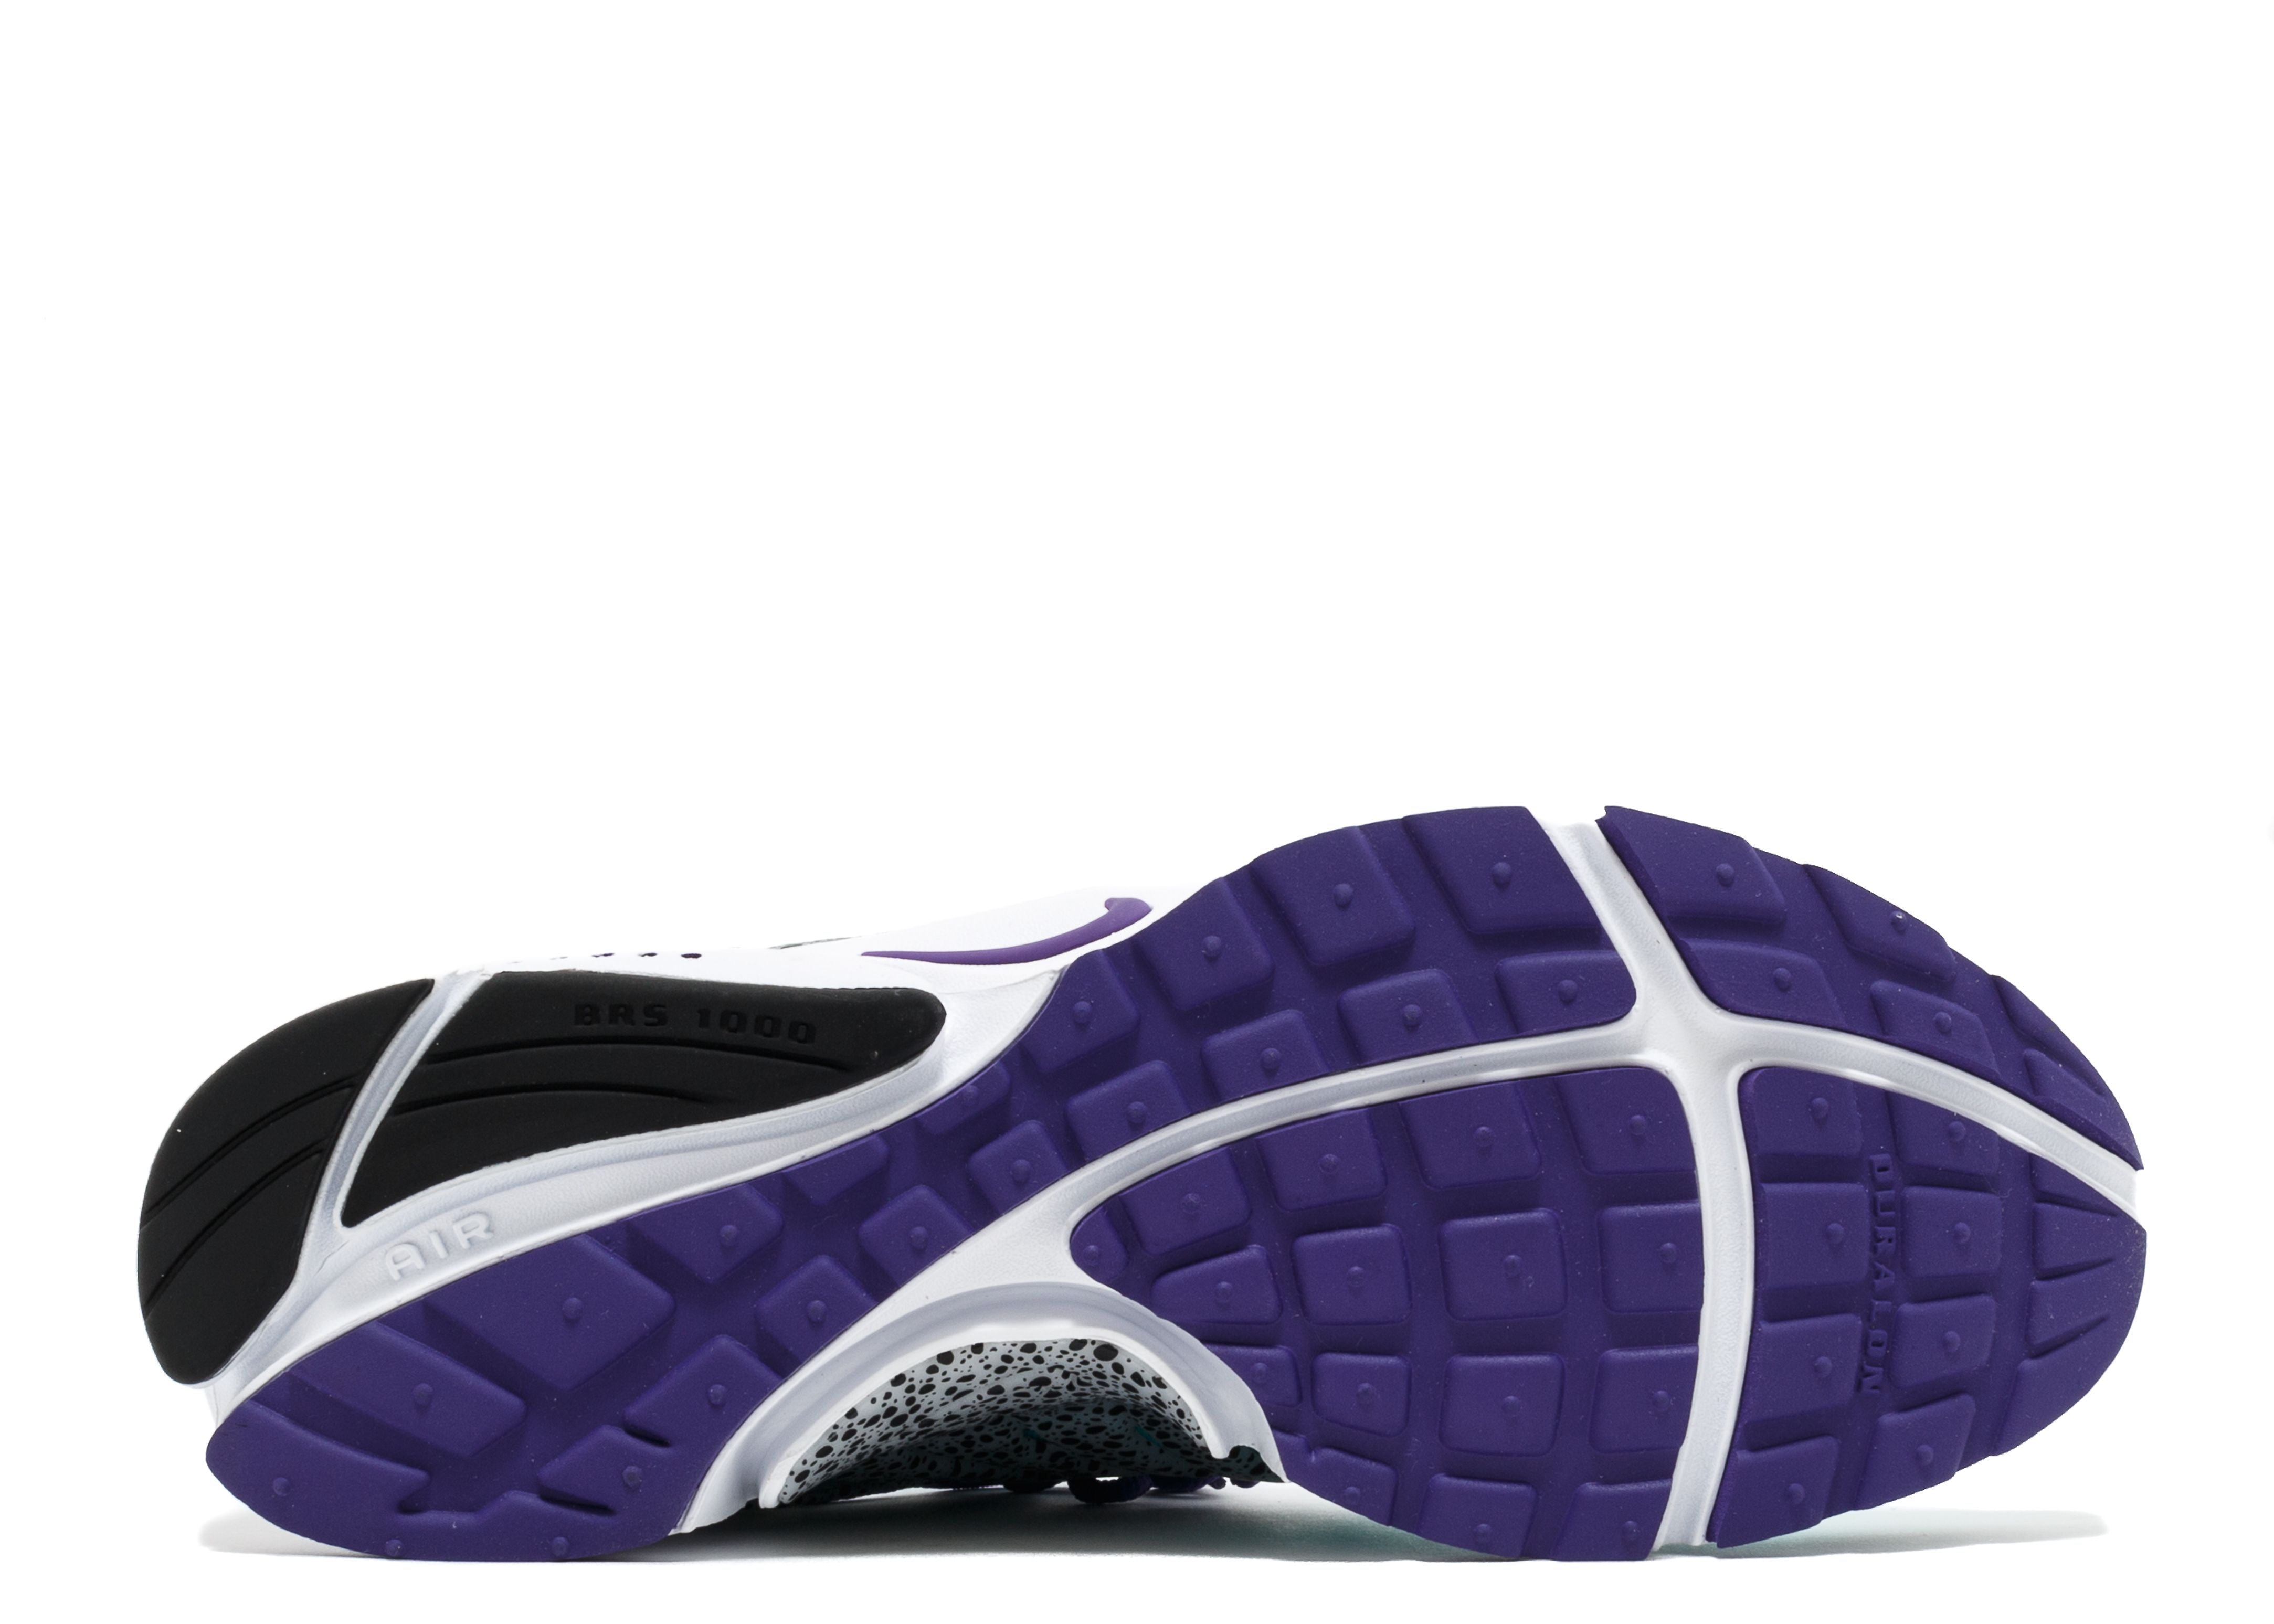 Air Presto 'Teal Safari' Nike - 886043 300 - turbo green/court purple-pure platinum | Flight Club